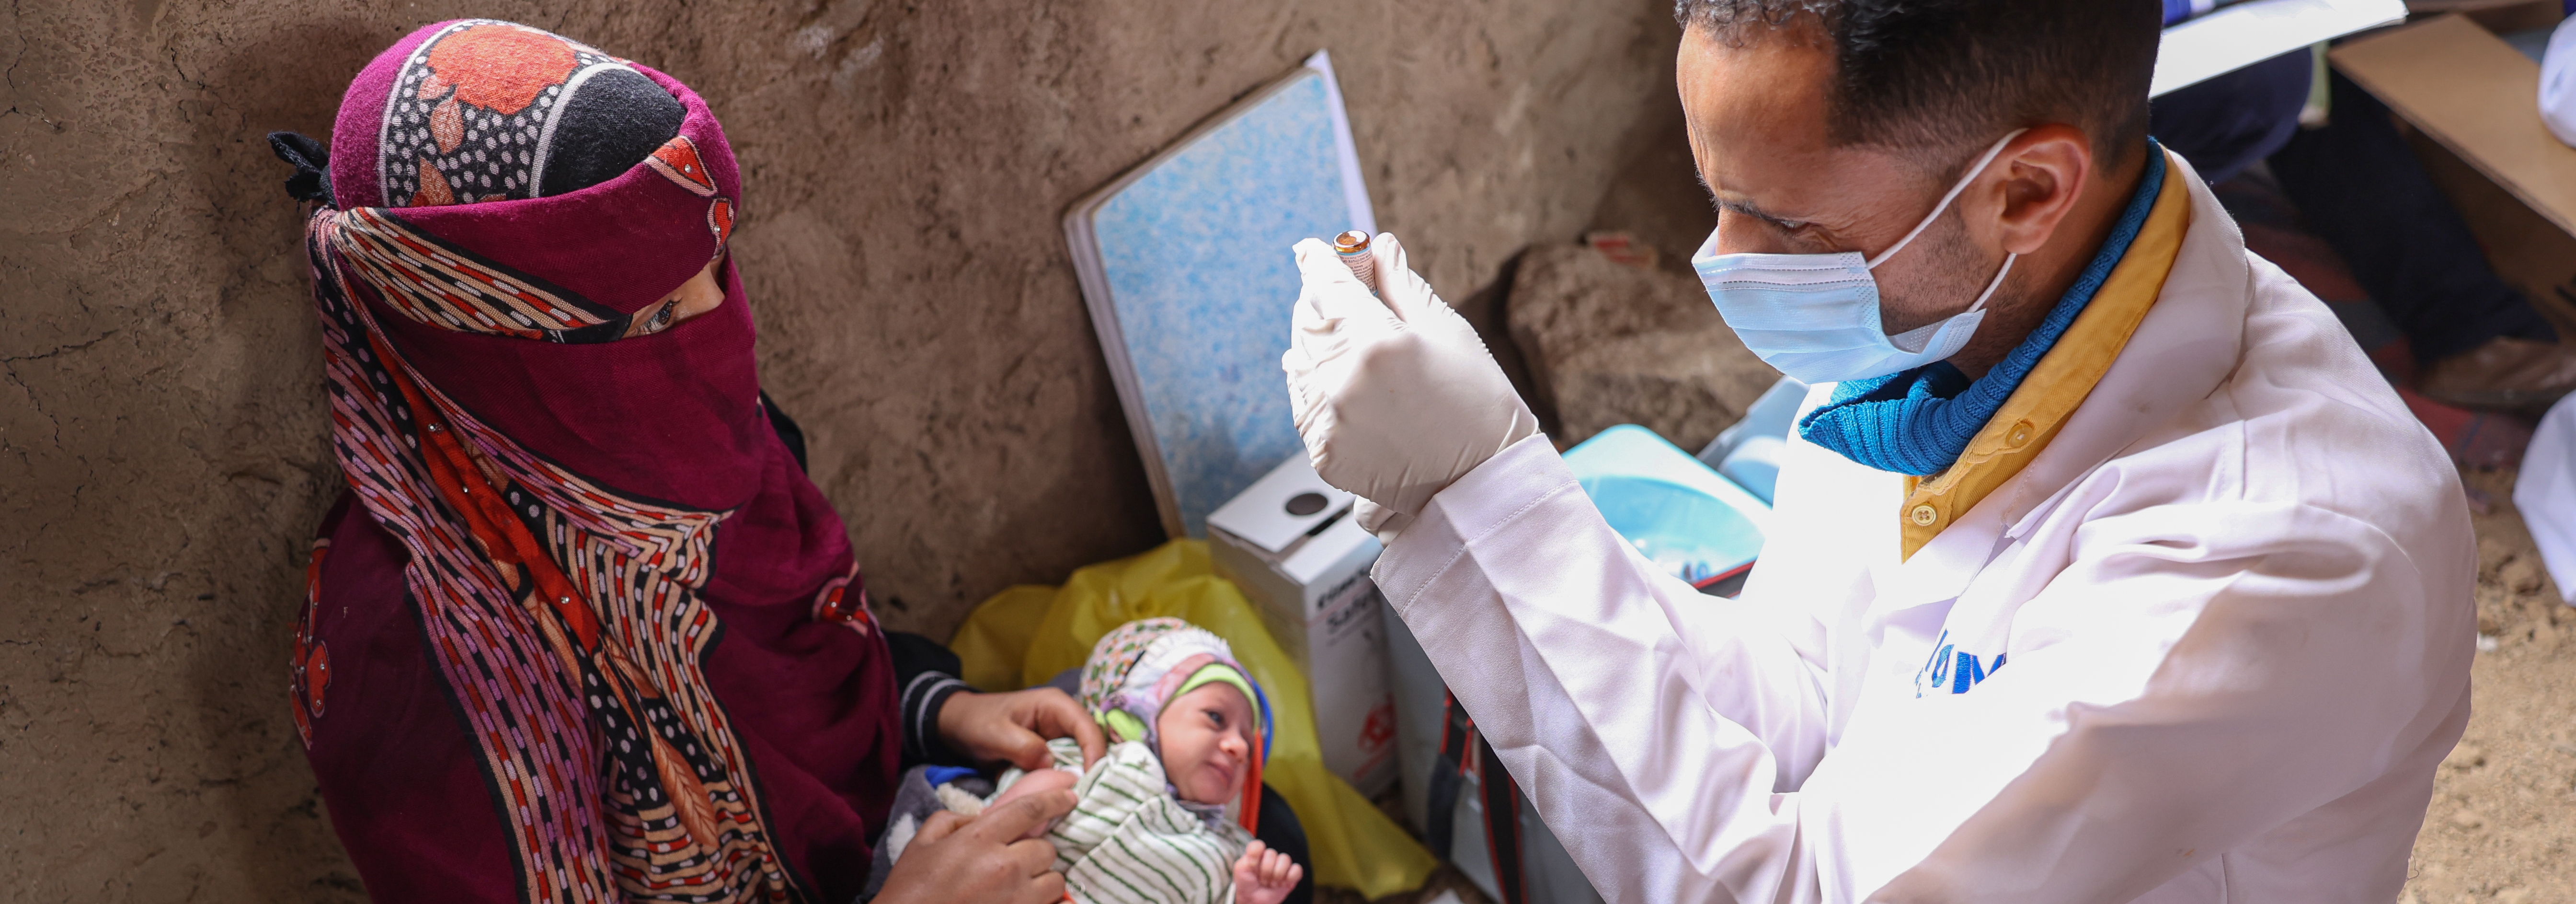 IOM’s health team inoculates a newborn baby born on Yemen’s west coast, June 2022, Saer Al Mawadem, Ta’iz. © IOM 2022 / Majed Mohammed